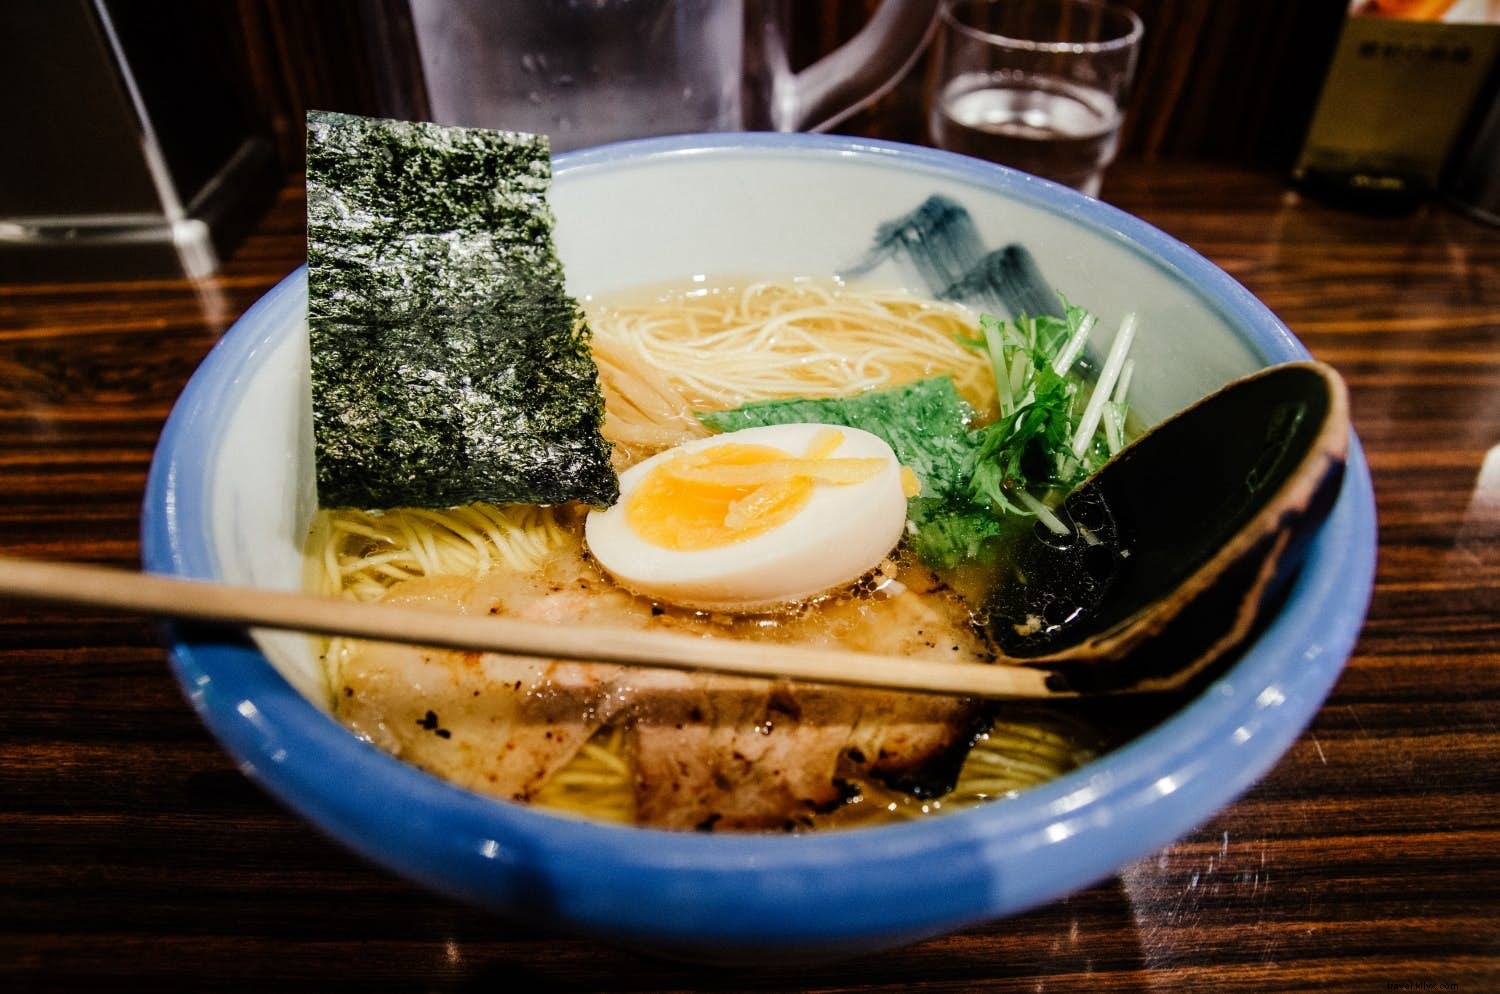 Mangiare fuori in giapponese:una guida ai ristoranti giapponesi 